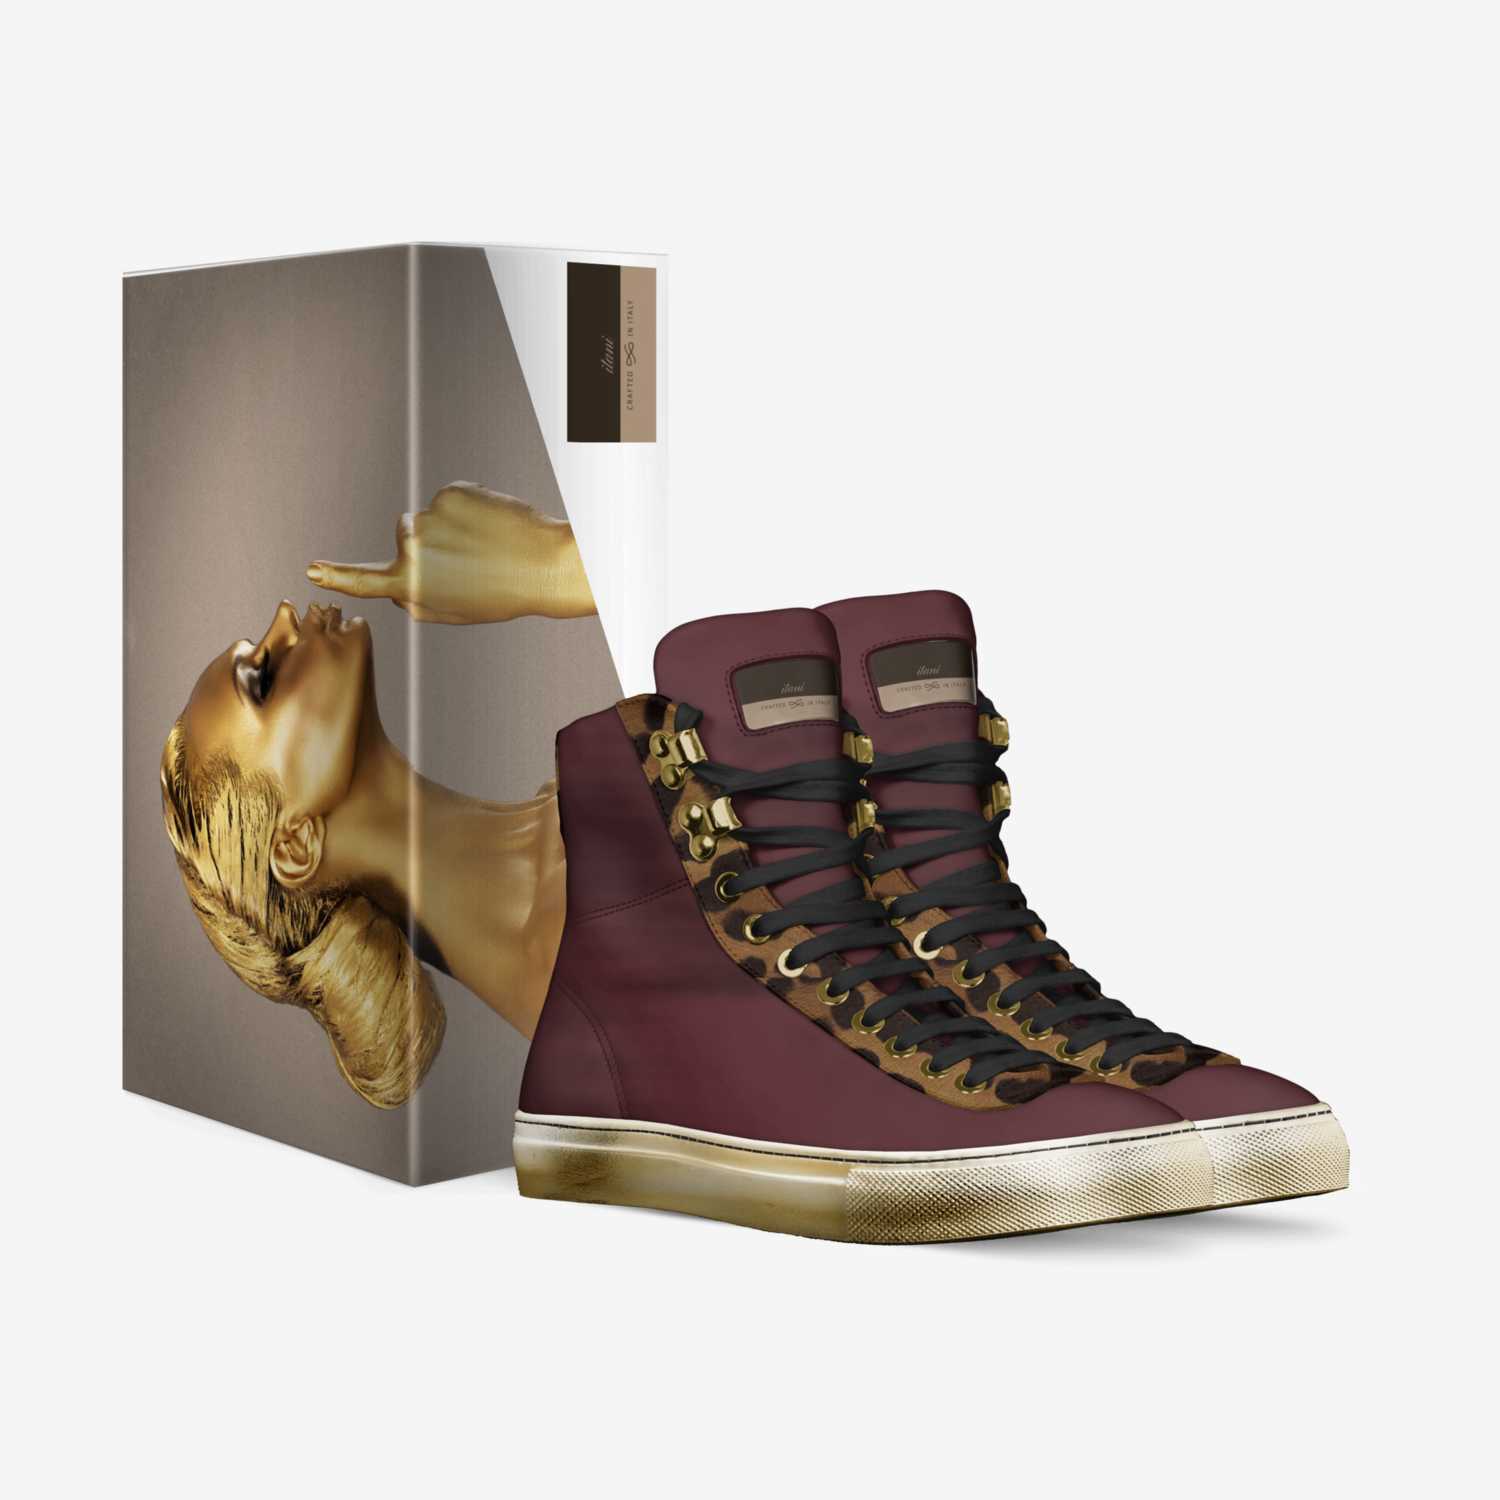 itani custom made in Italy shoes by Amanda J. Itani | Box view